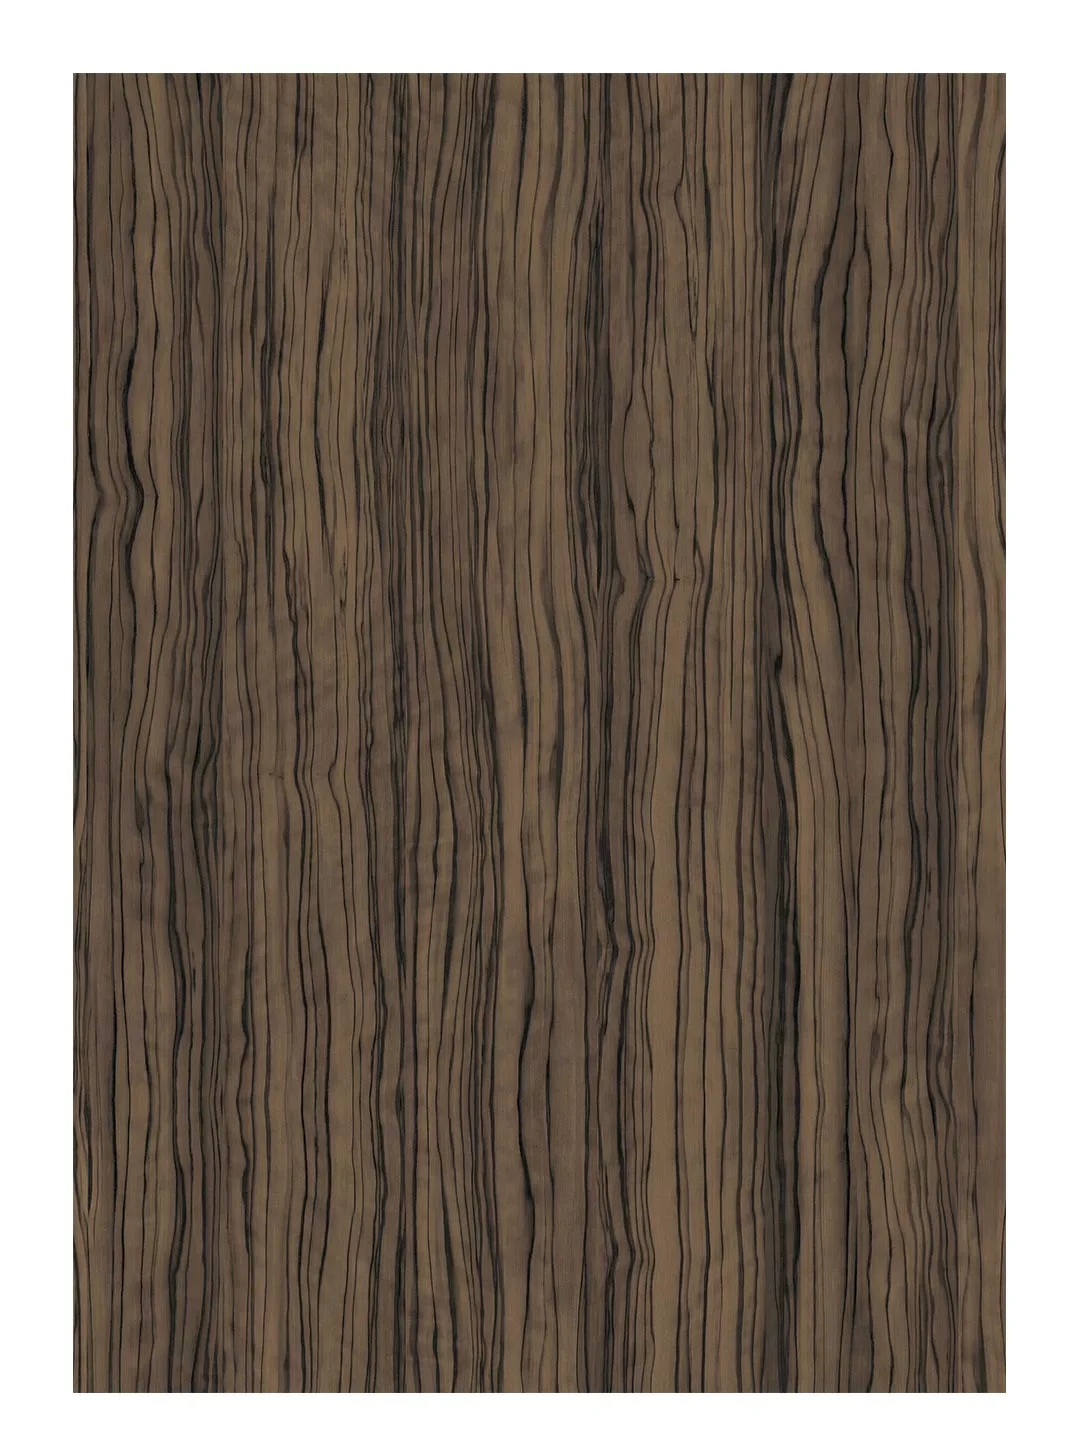 Alutech - Natural Wood | NW-214 - BLACK EBONY